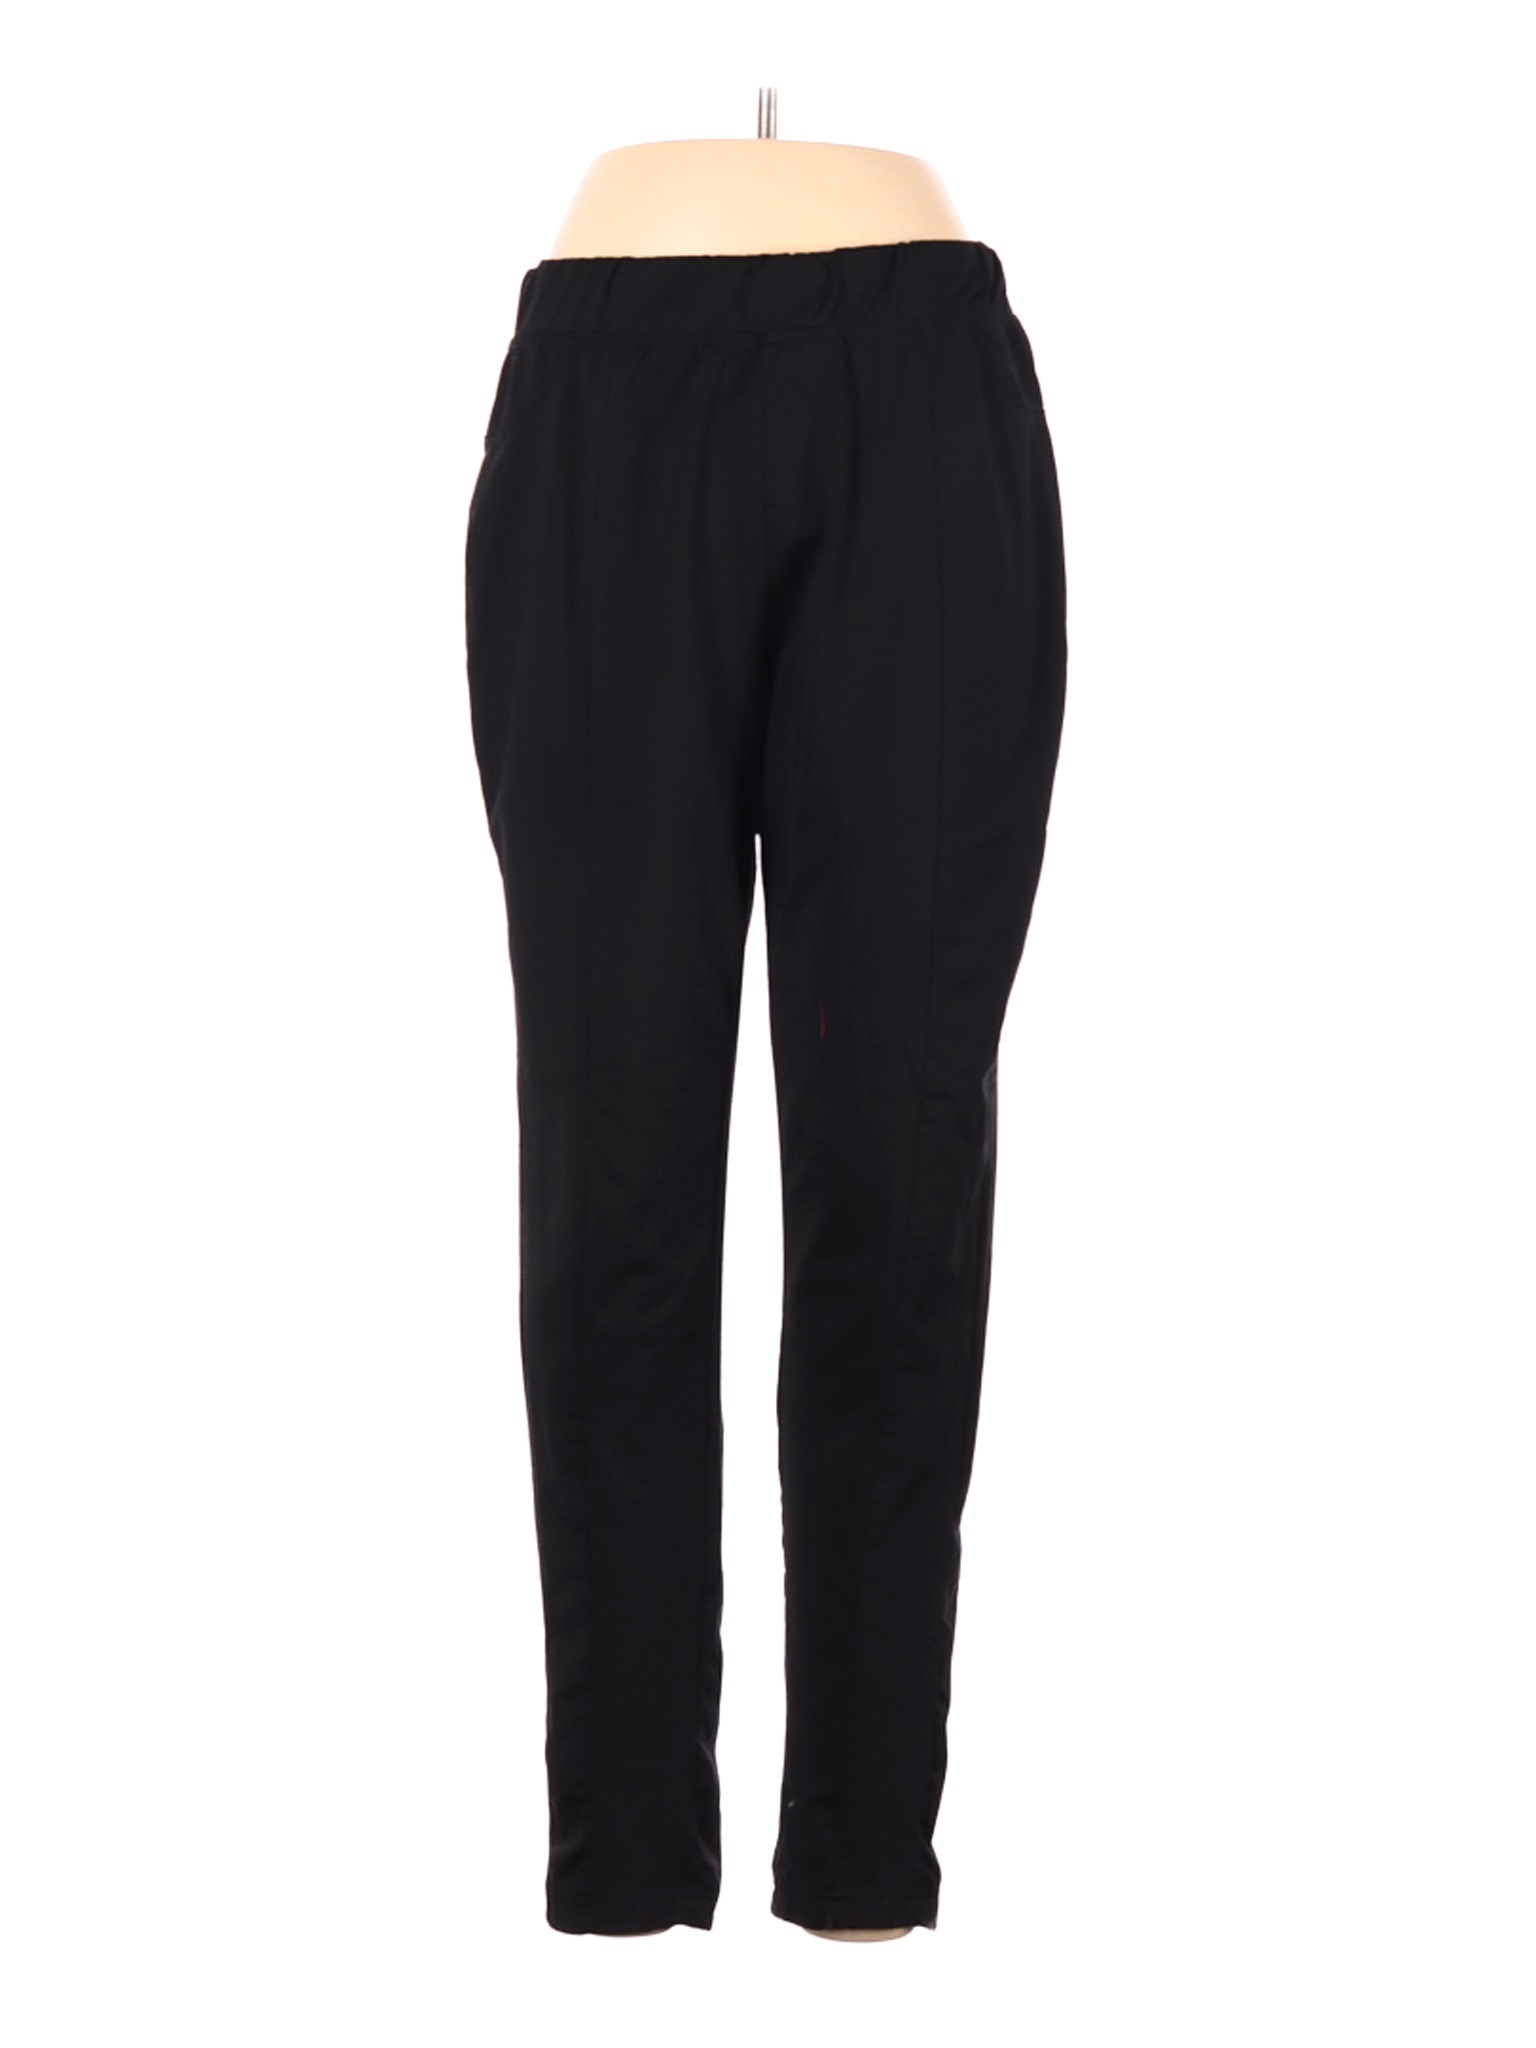 French Laundry Women Black Casual Pants XL | eBay